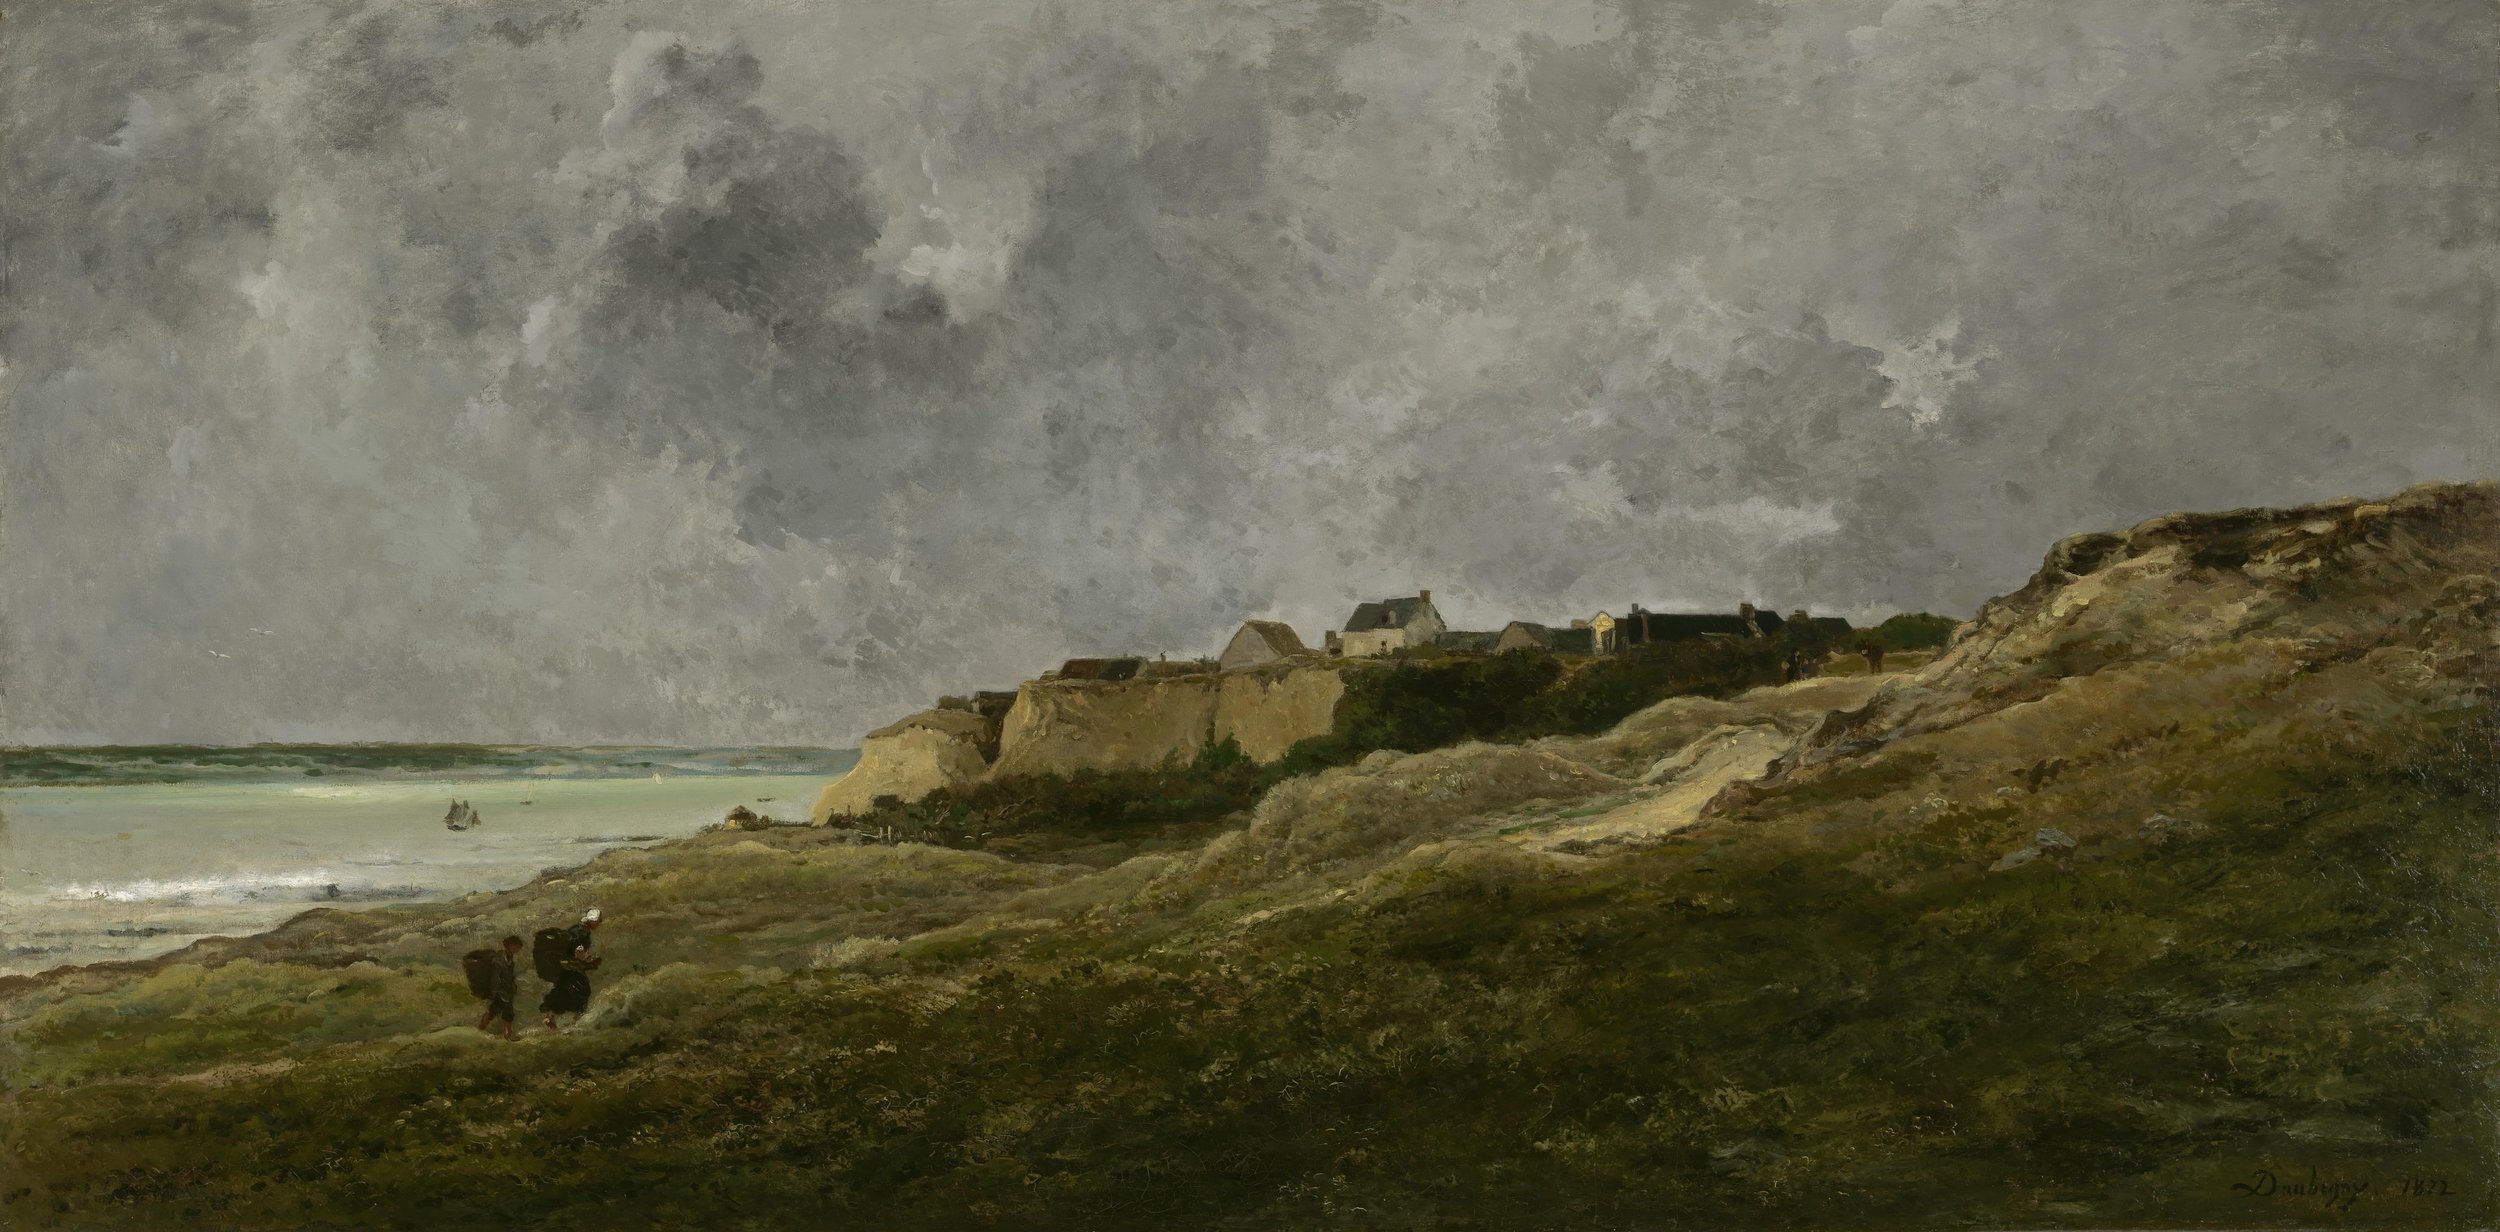   Charles-François Daubigny  Cliffs at Villerville-sur-Mer, ca. 1864 Image: © The Mesdag Collection 